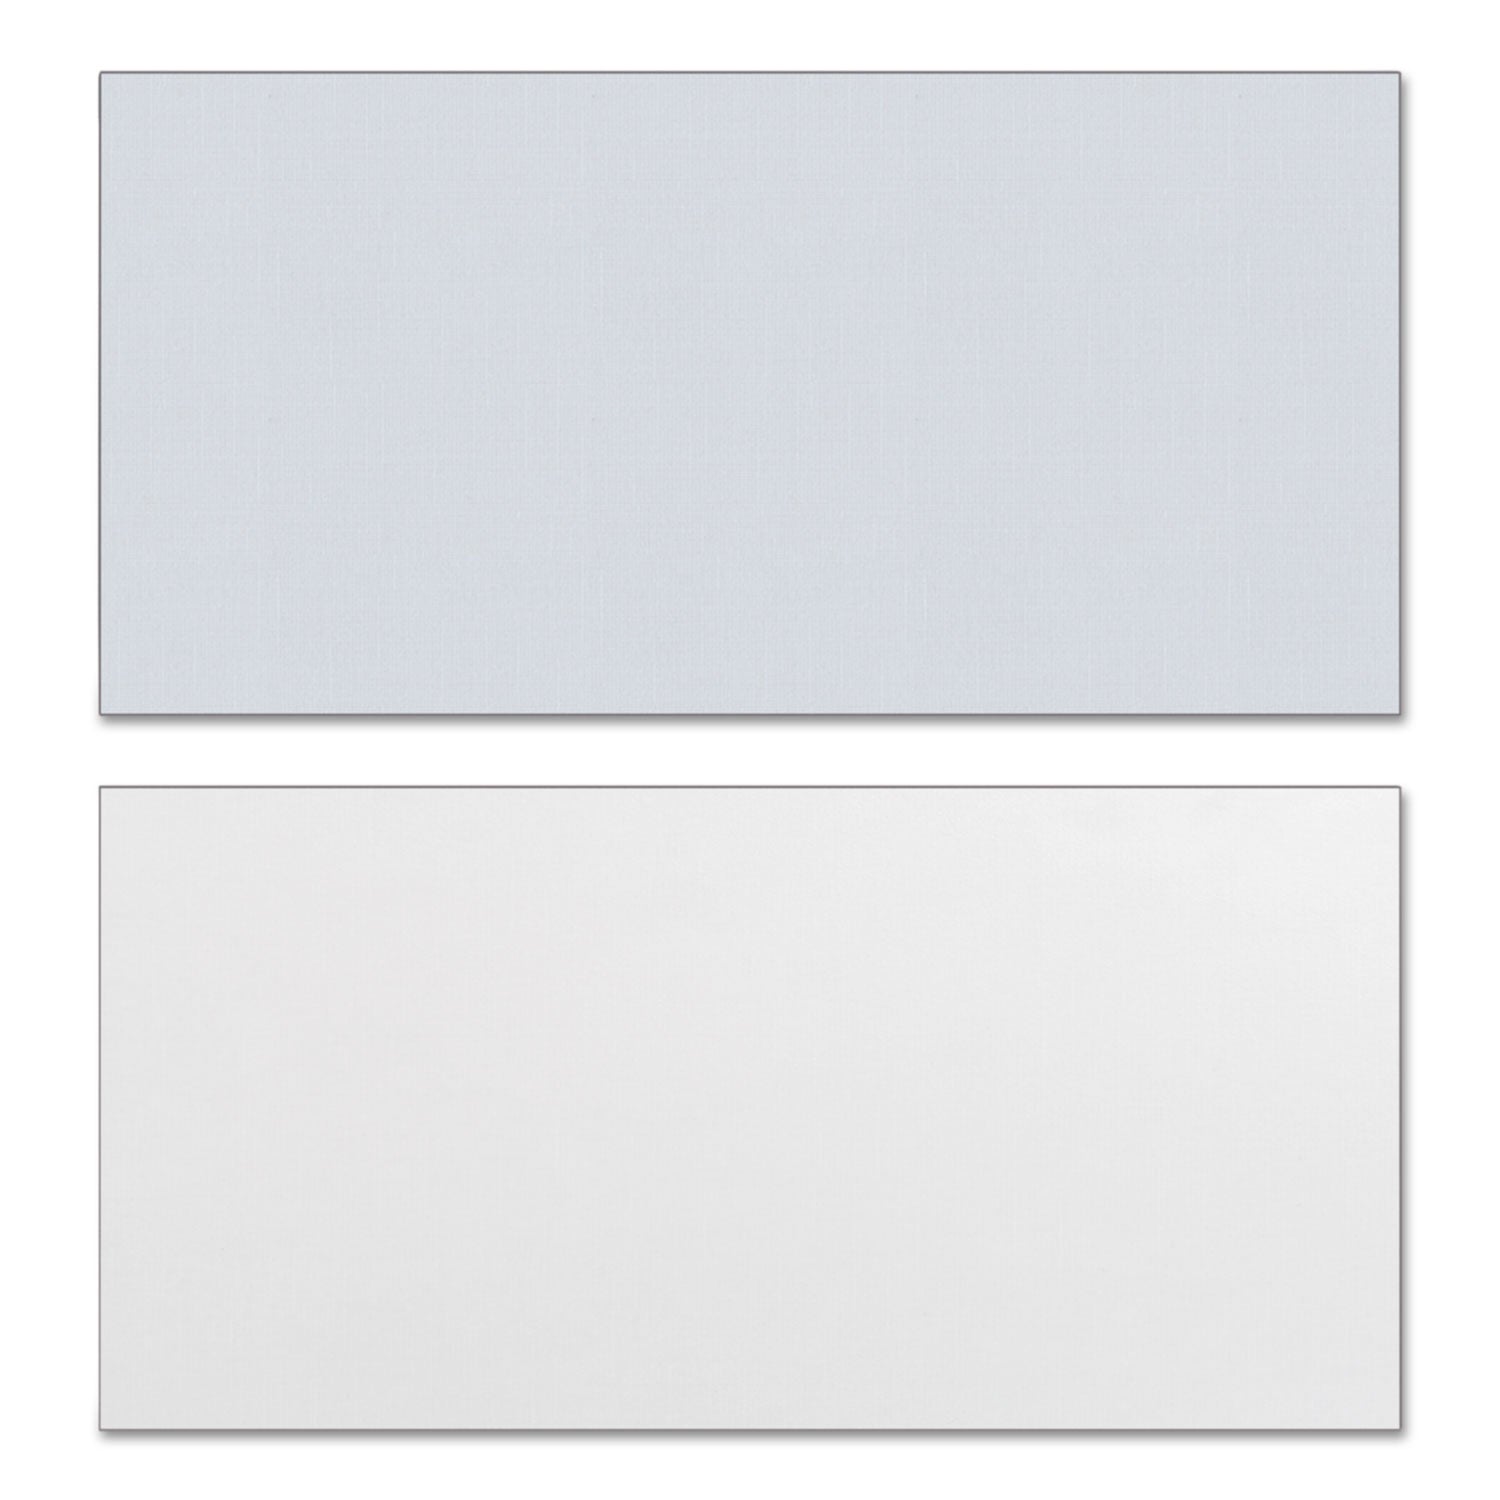 reversible-laminate-table-top-rectangular-5938w-x-2363d-white-gray_alett6024wg - 2